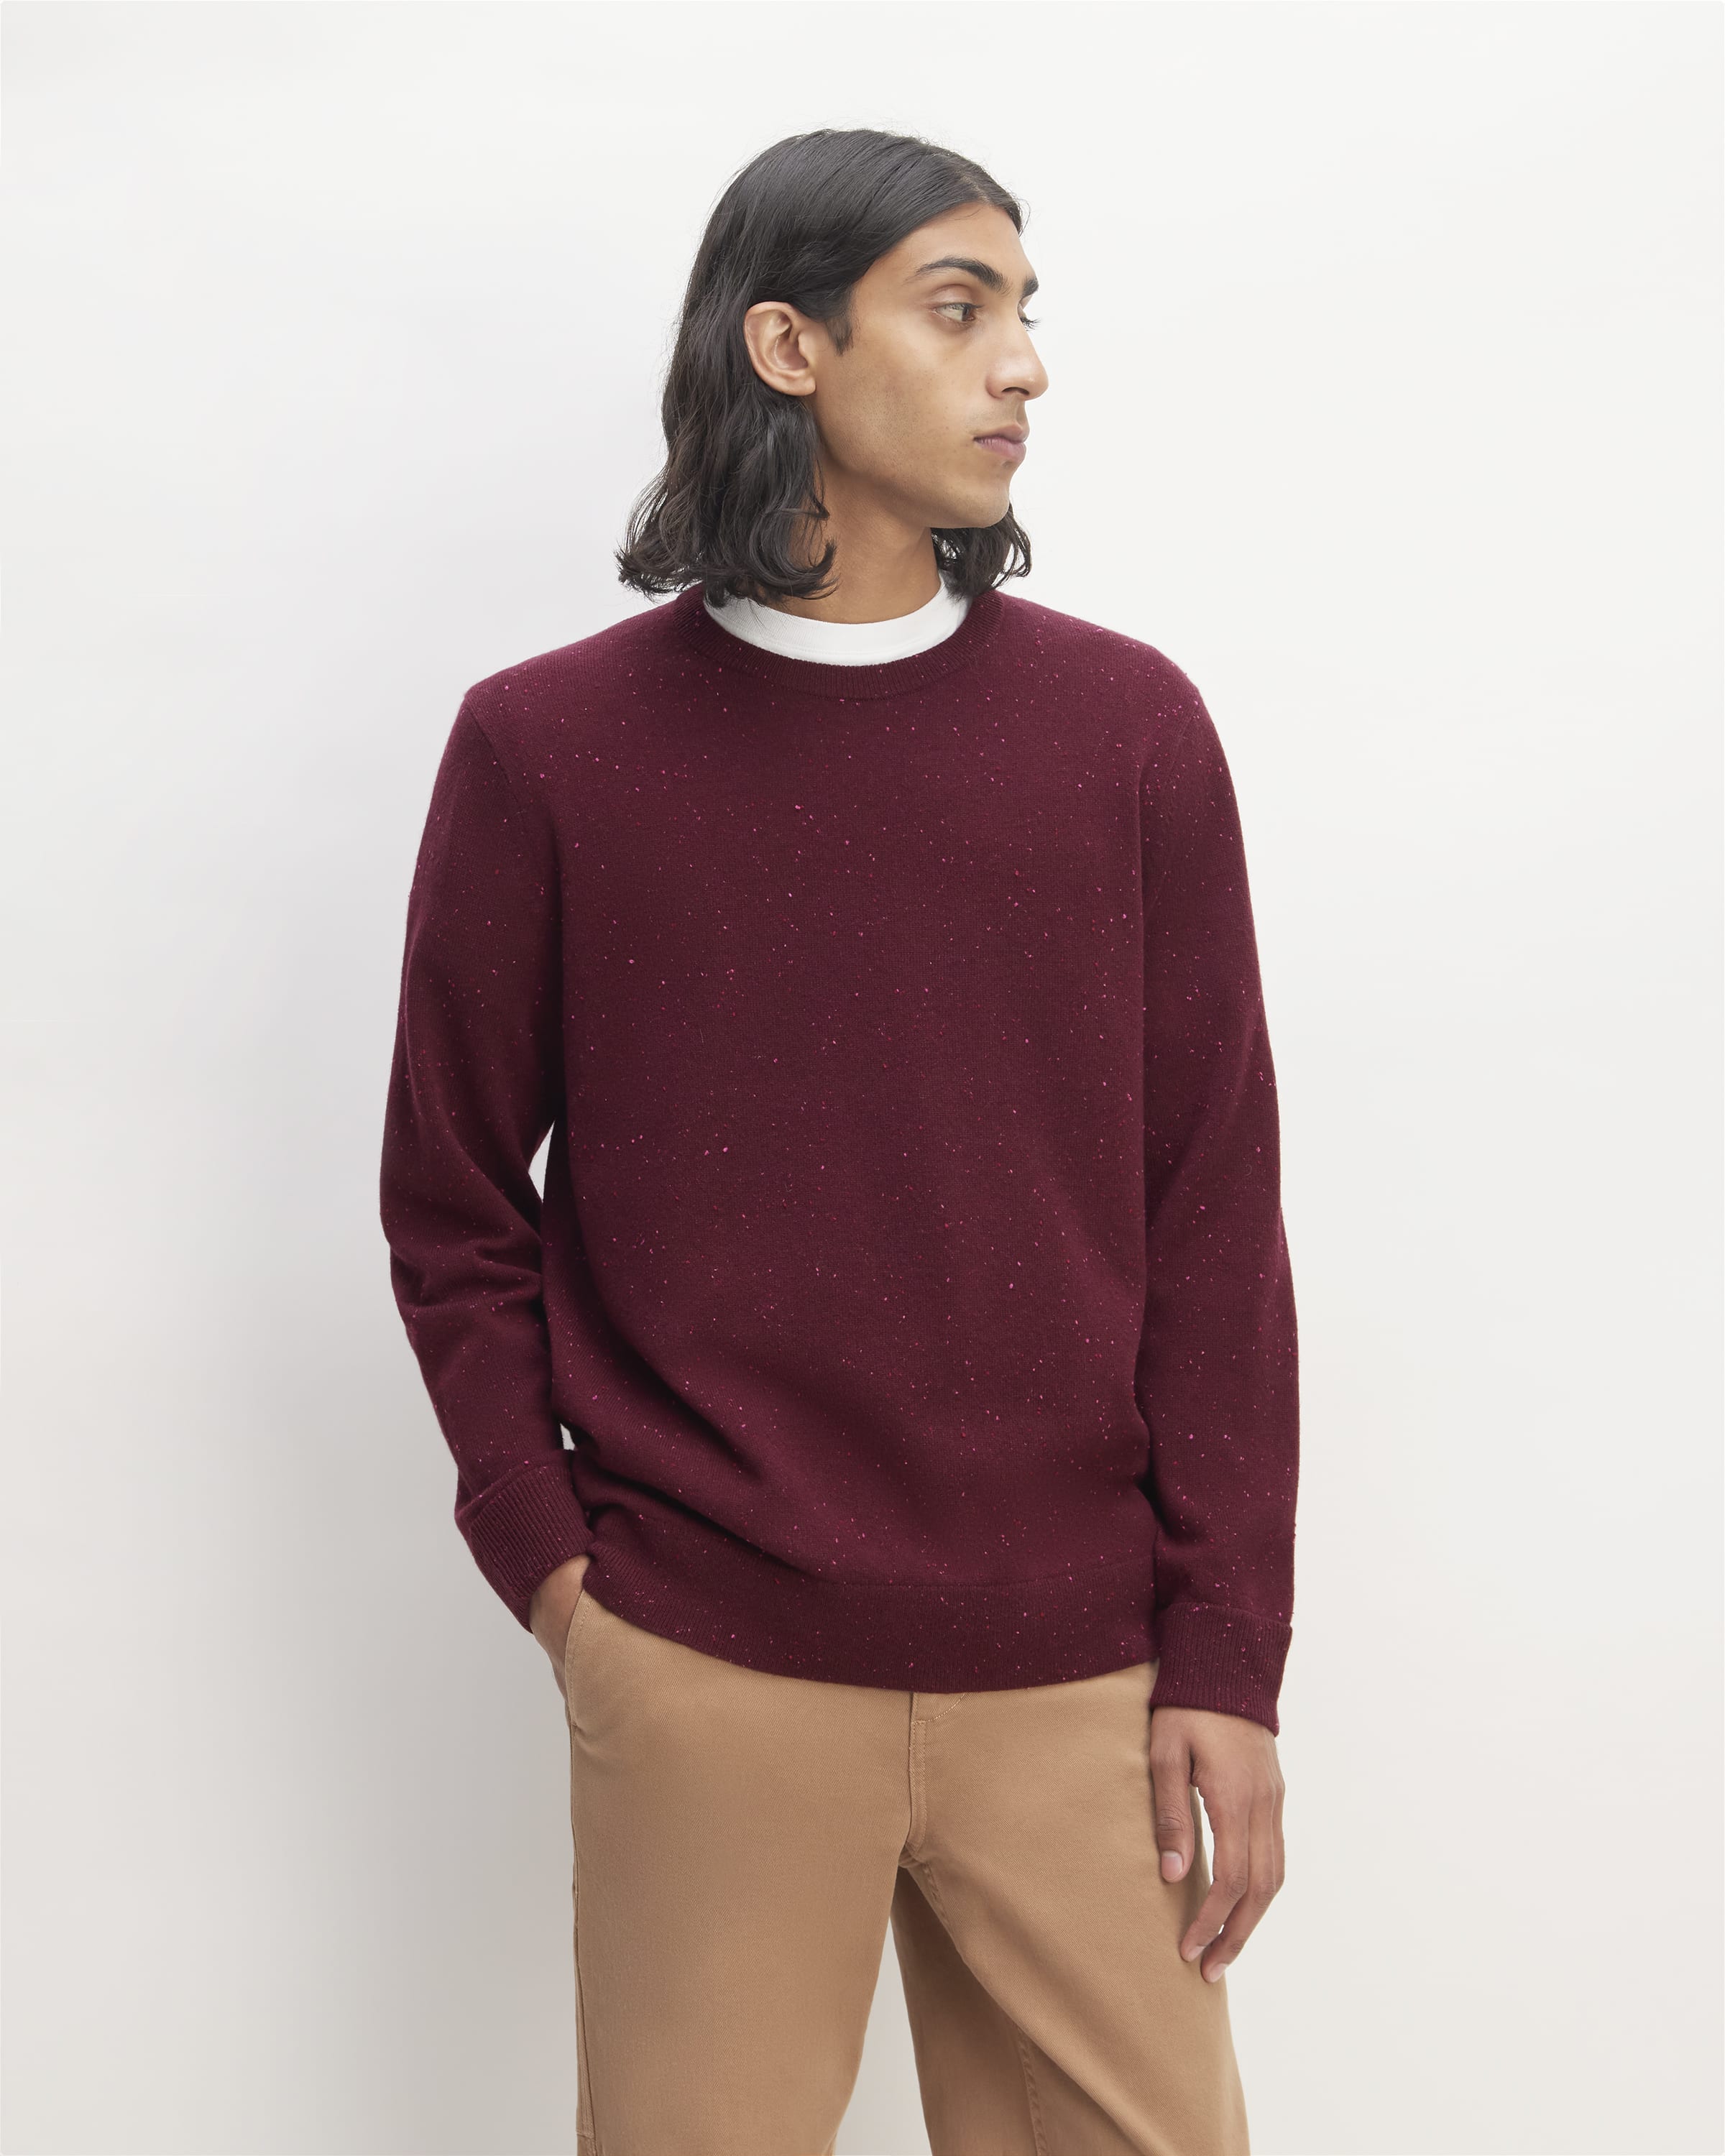 Washable Cashmere Topper Sweater Burgundy Size Medium 42 